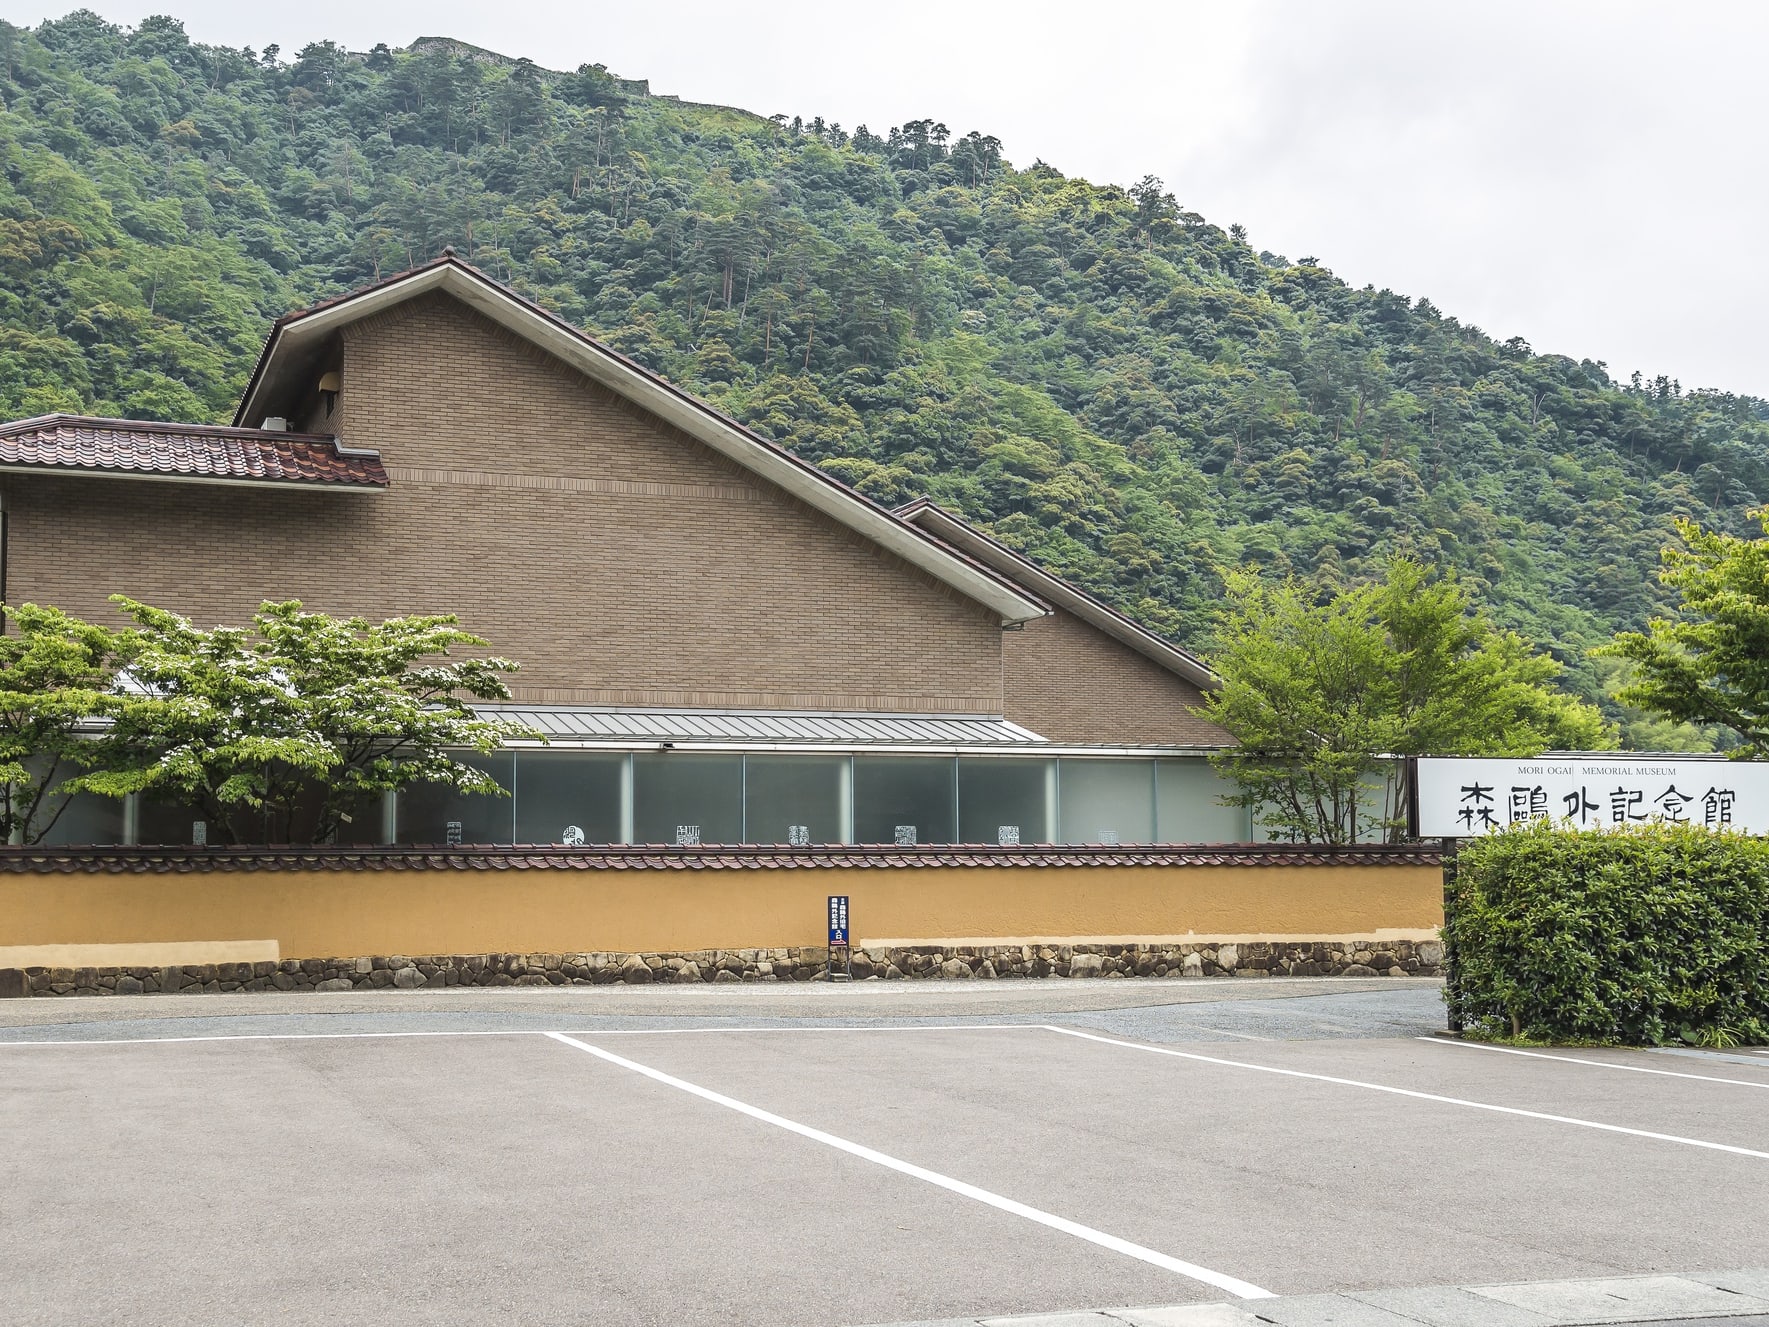 The Mori Ogai Memorial Museum Commemorating the Japanese Literary Master, Mori Ogai